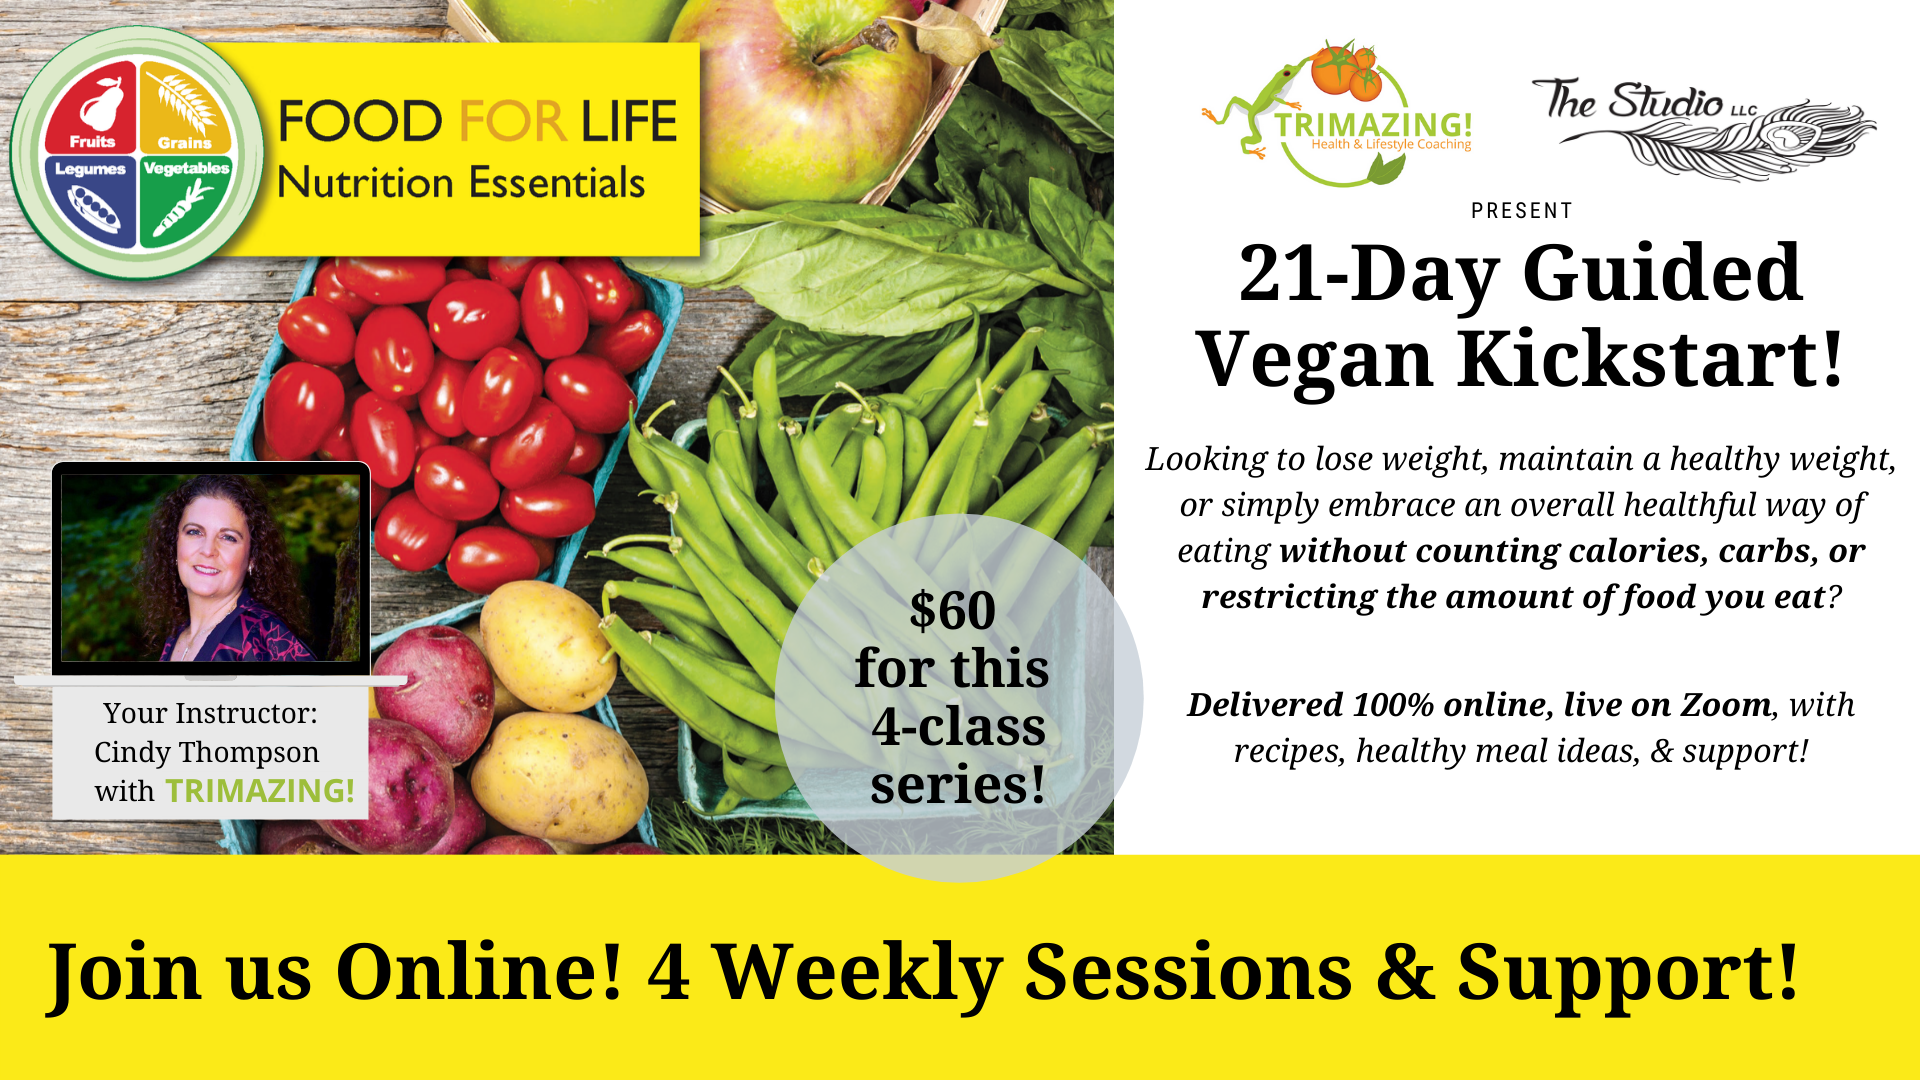 21-Day Guided Vegan Kickstart with Trimazing!